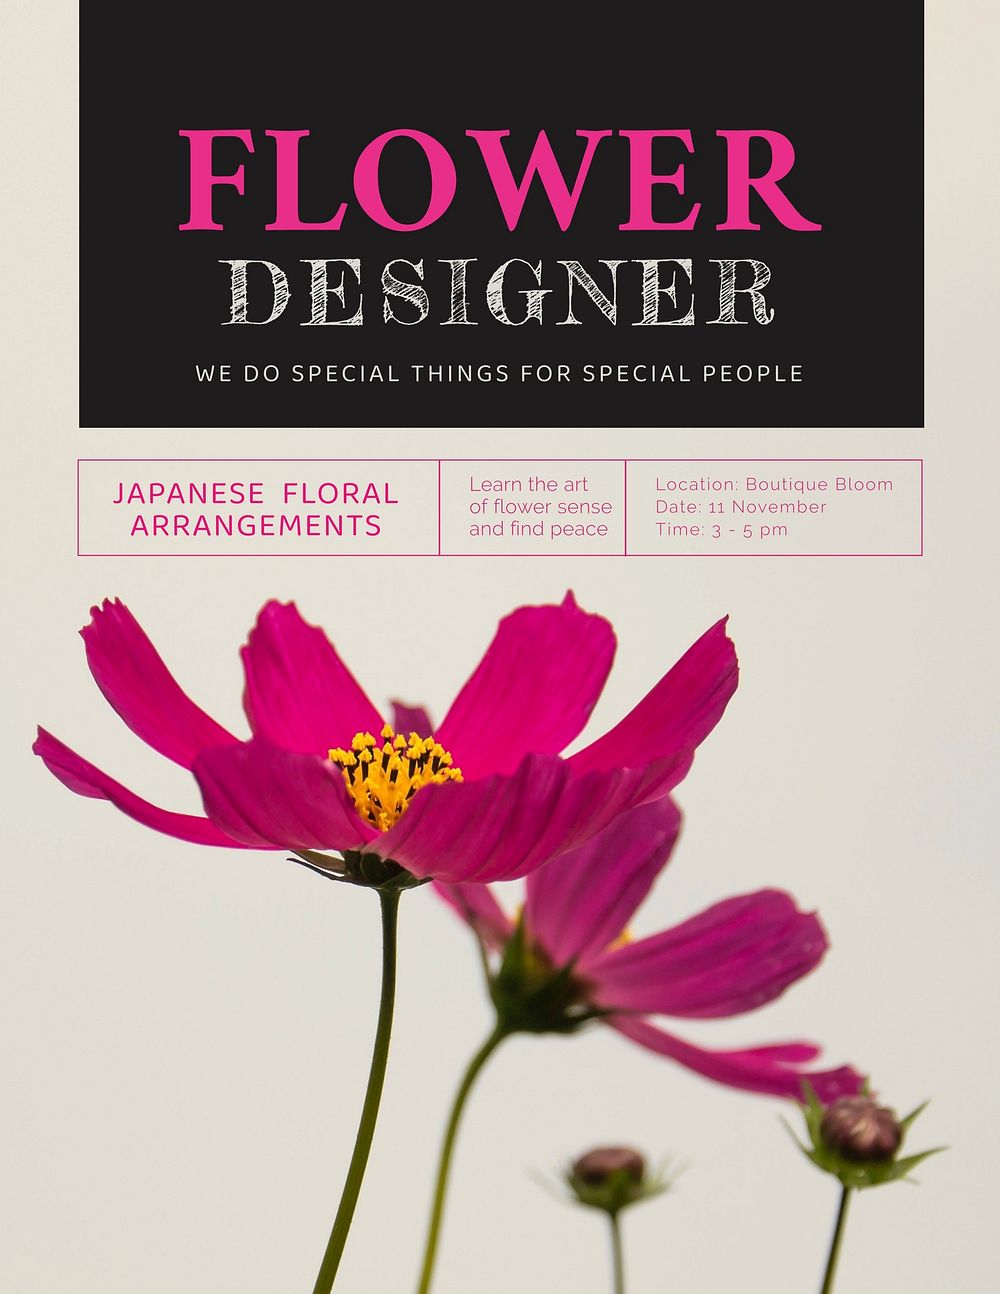 Aesthetic flower flyer editable template, event advertisement